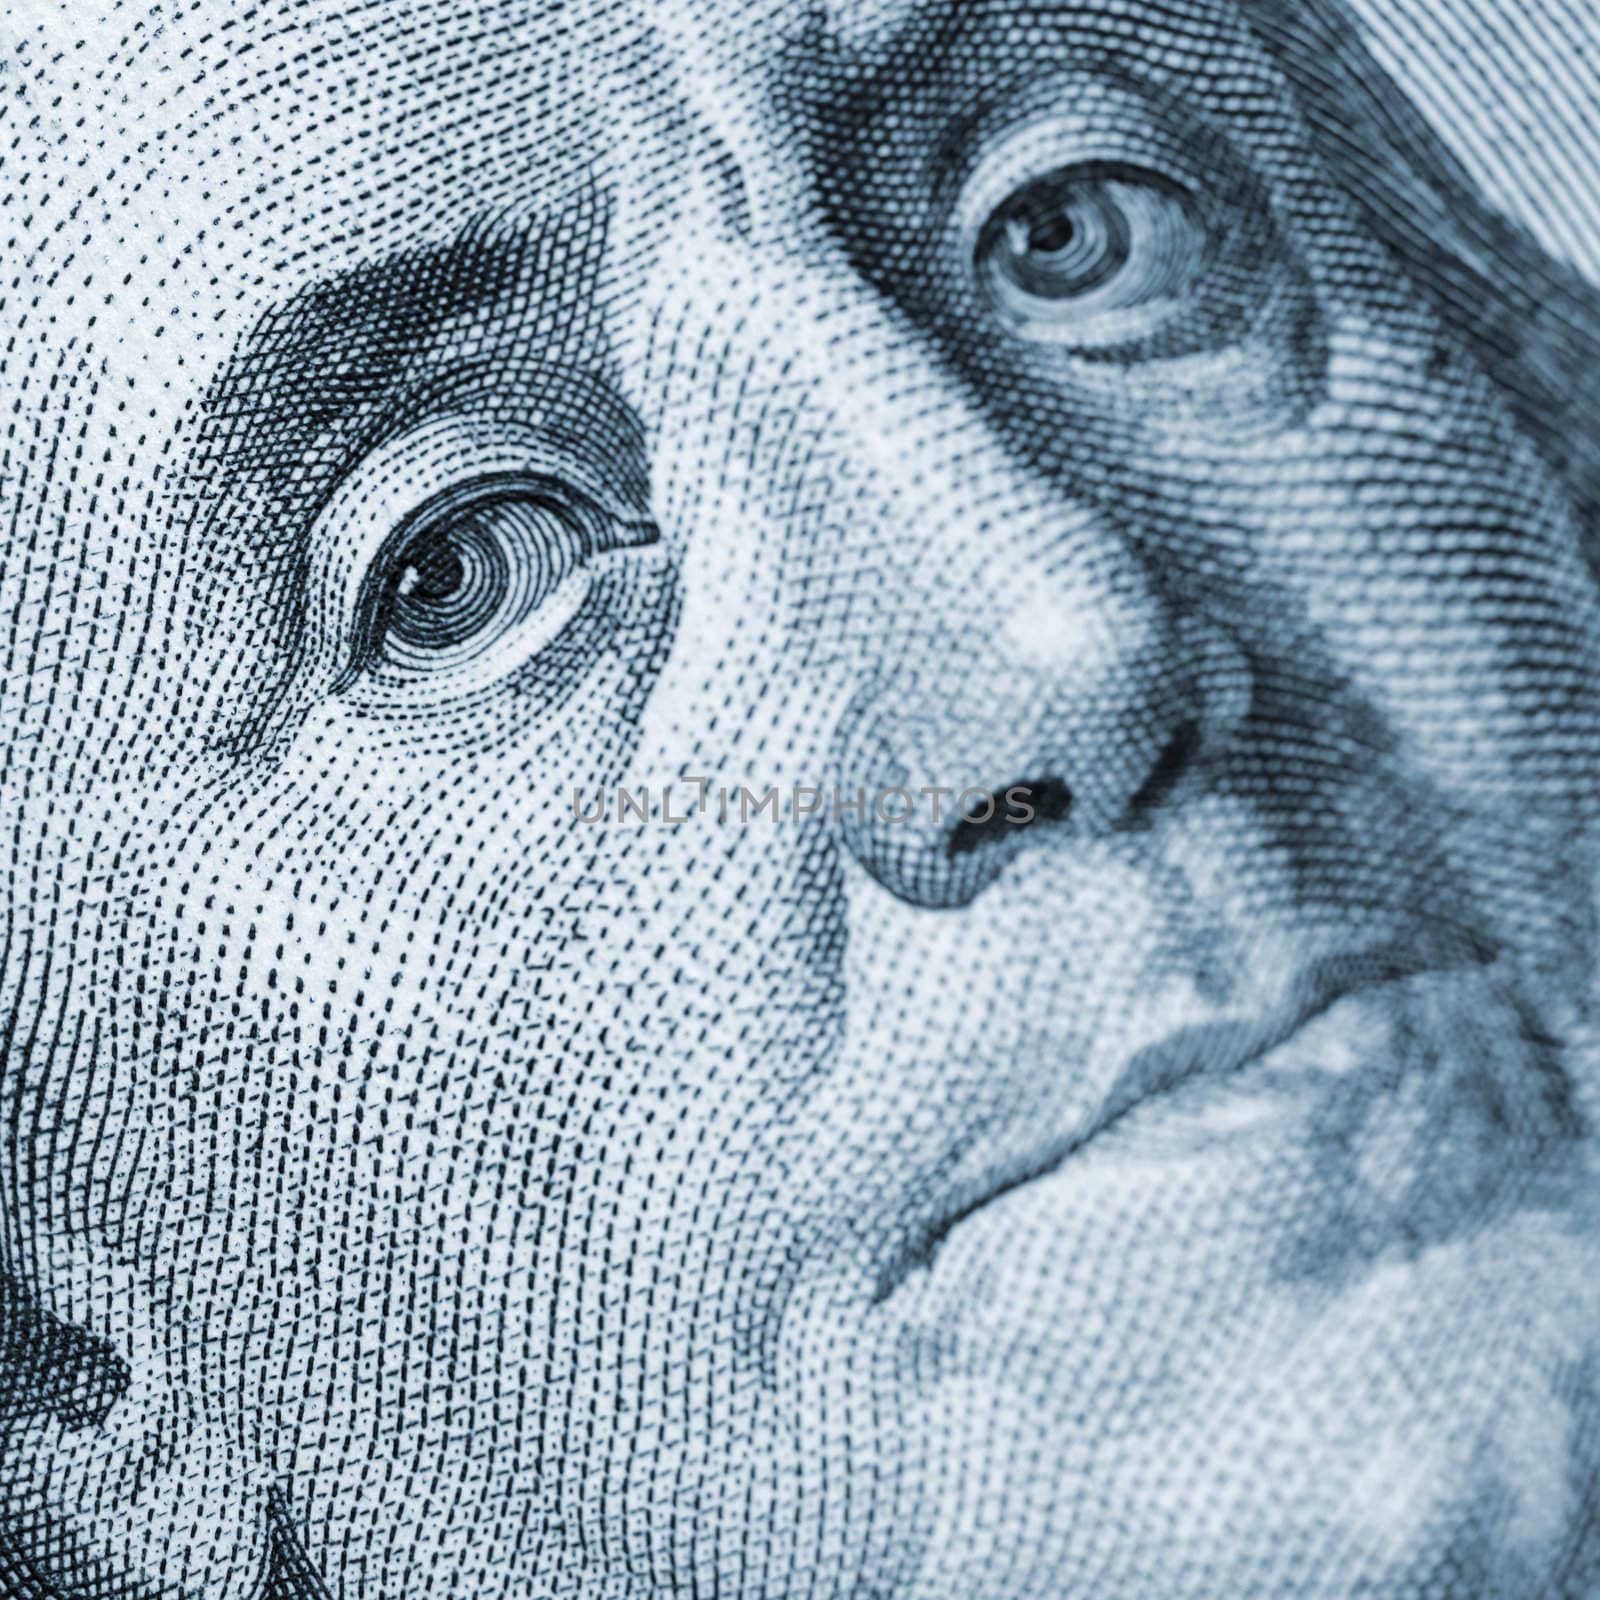 Franklin portrait closeup blue color. A fragment of a photo hundred dollar denominations